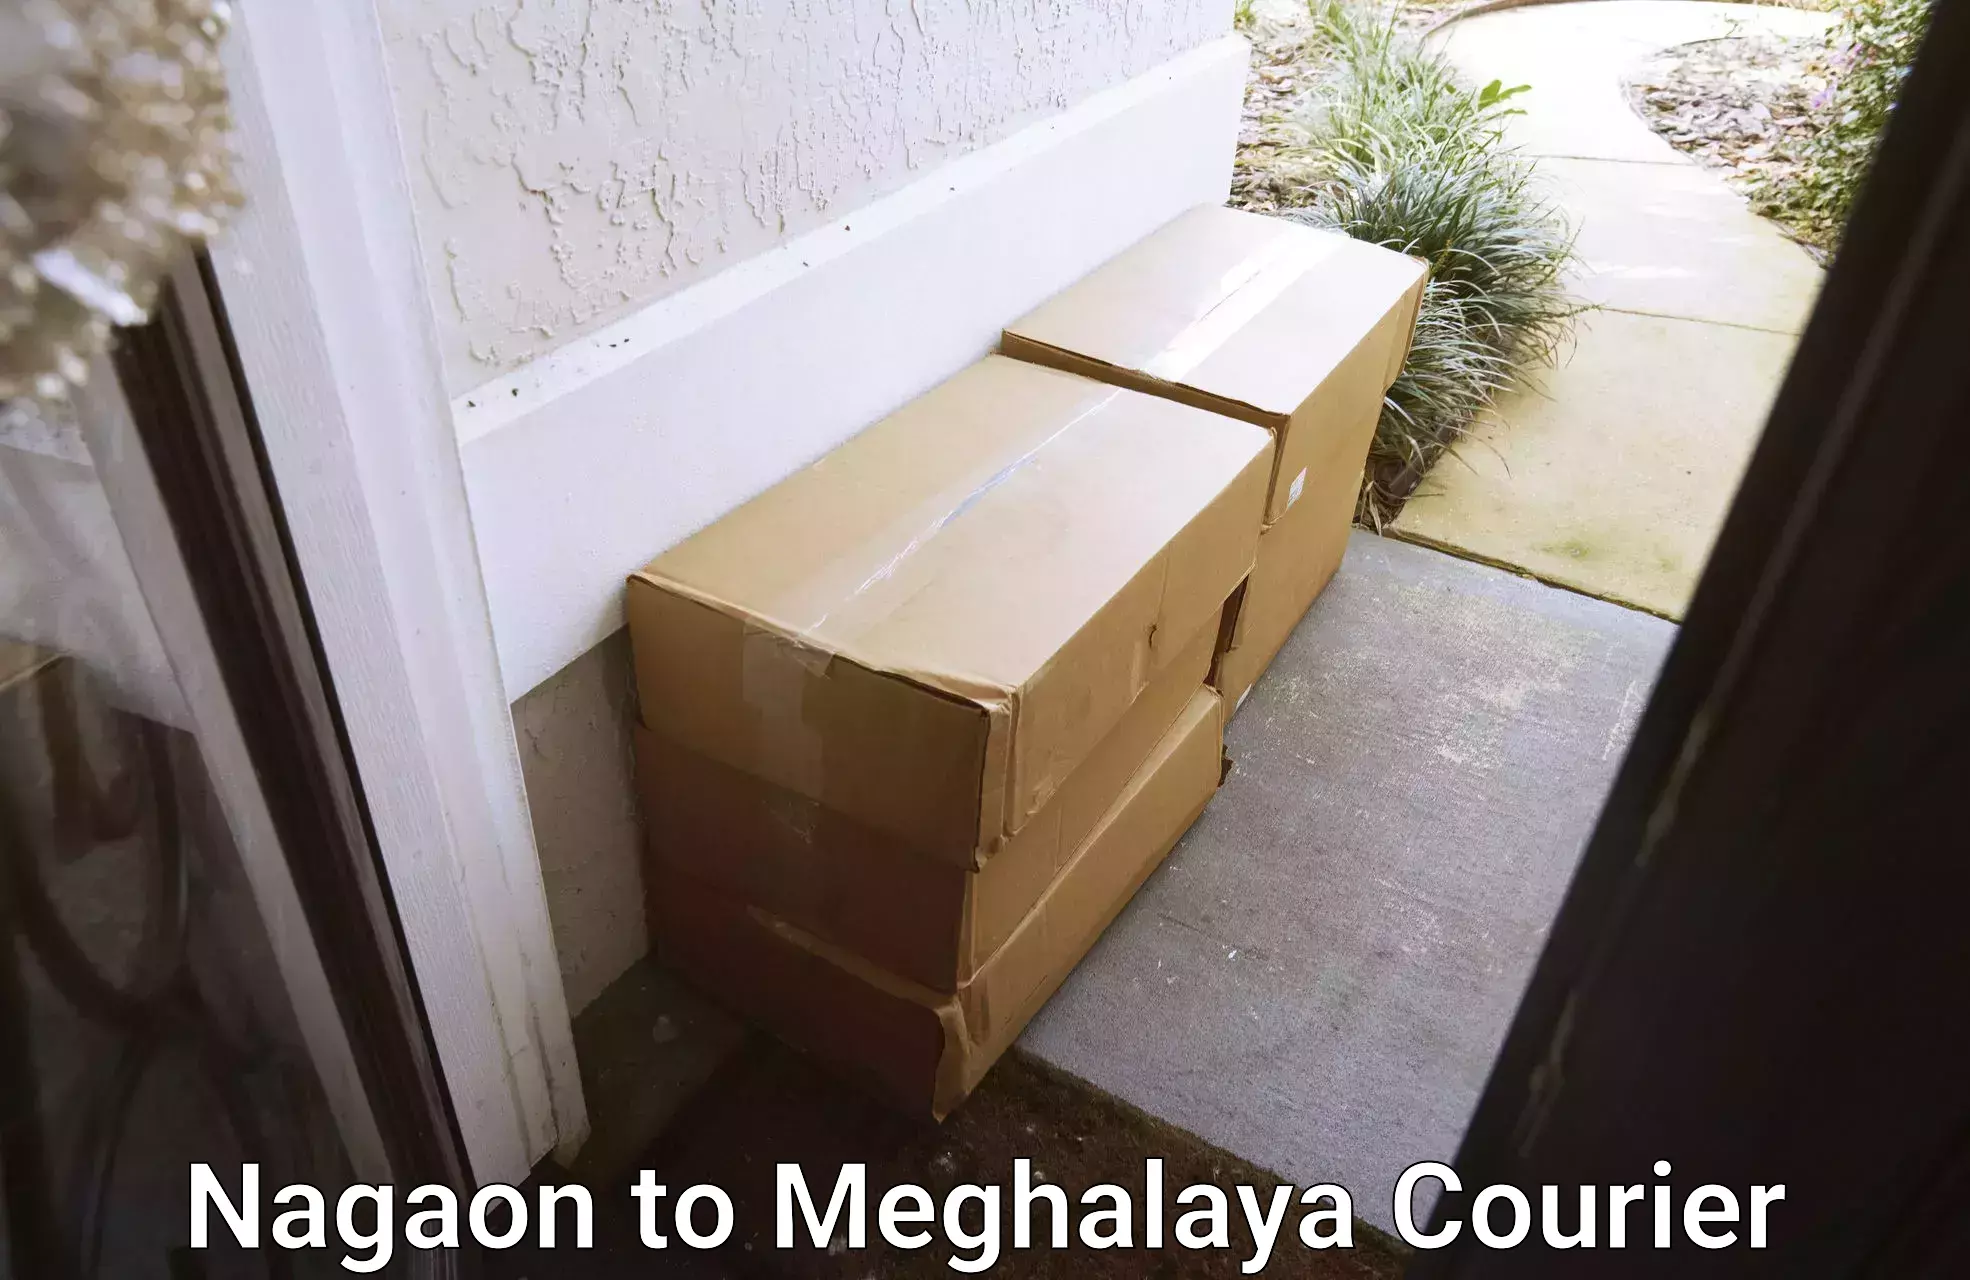 Urgent courier needs Nagaon to Jowai